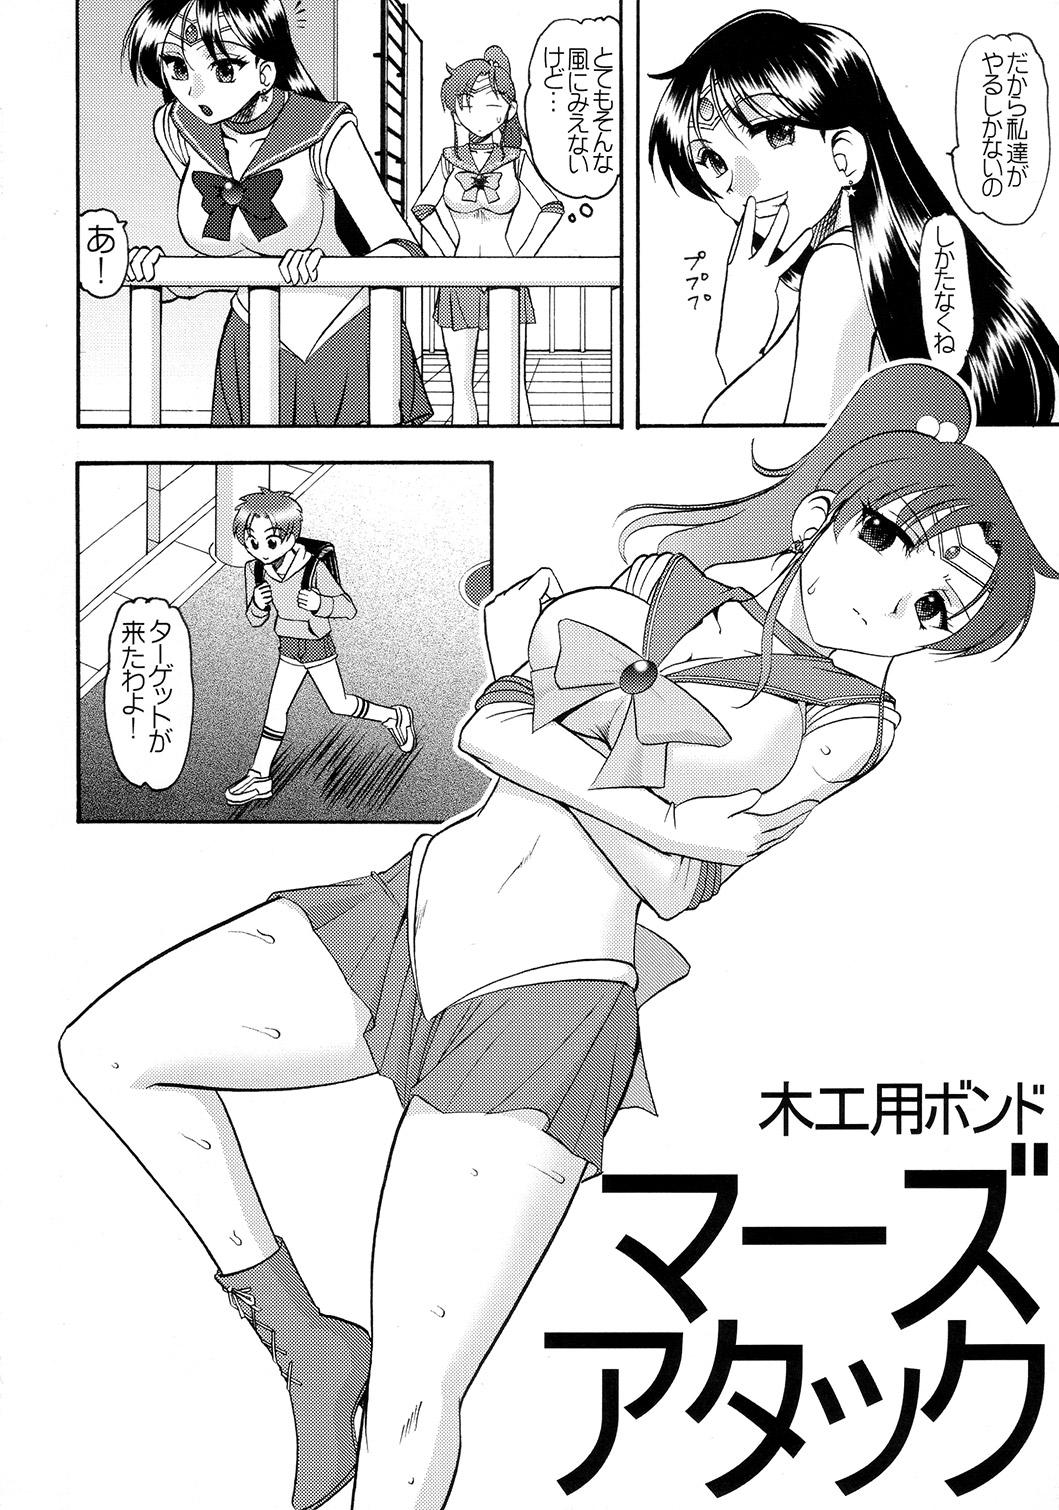 Roughsex SEMEDAIN G WORKS vol.33 - Wakusei Chokuretsu - Sailor moon Vergon - Page 5